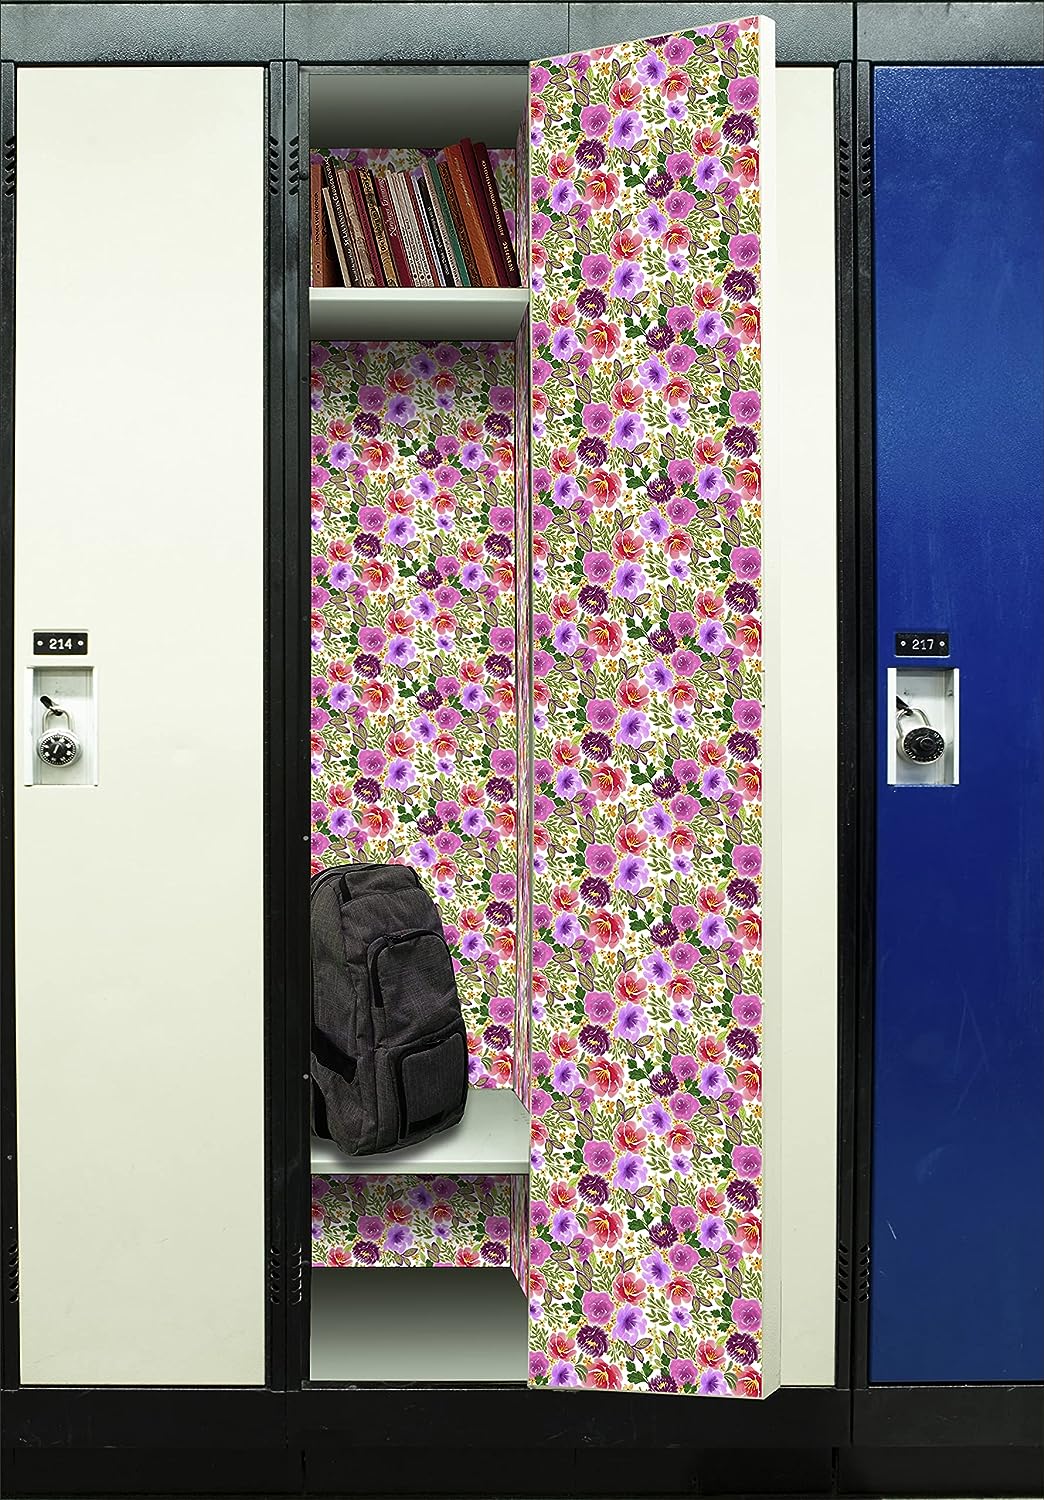 PELICAN INDUSTRIAL Wallpaper - Magnetic School Locker Wallpaper (Full Sheet Magnetic) - Flowers - Pack of 3 Sheets - vr13